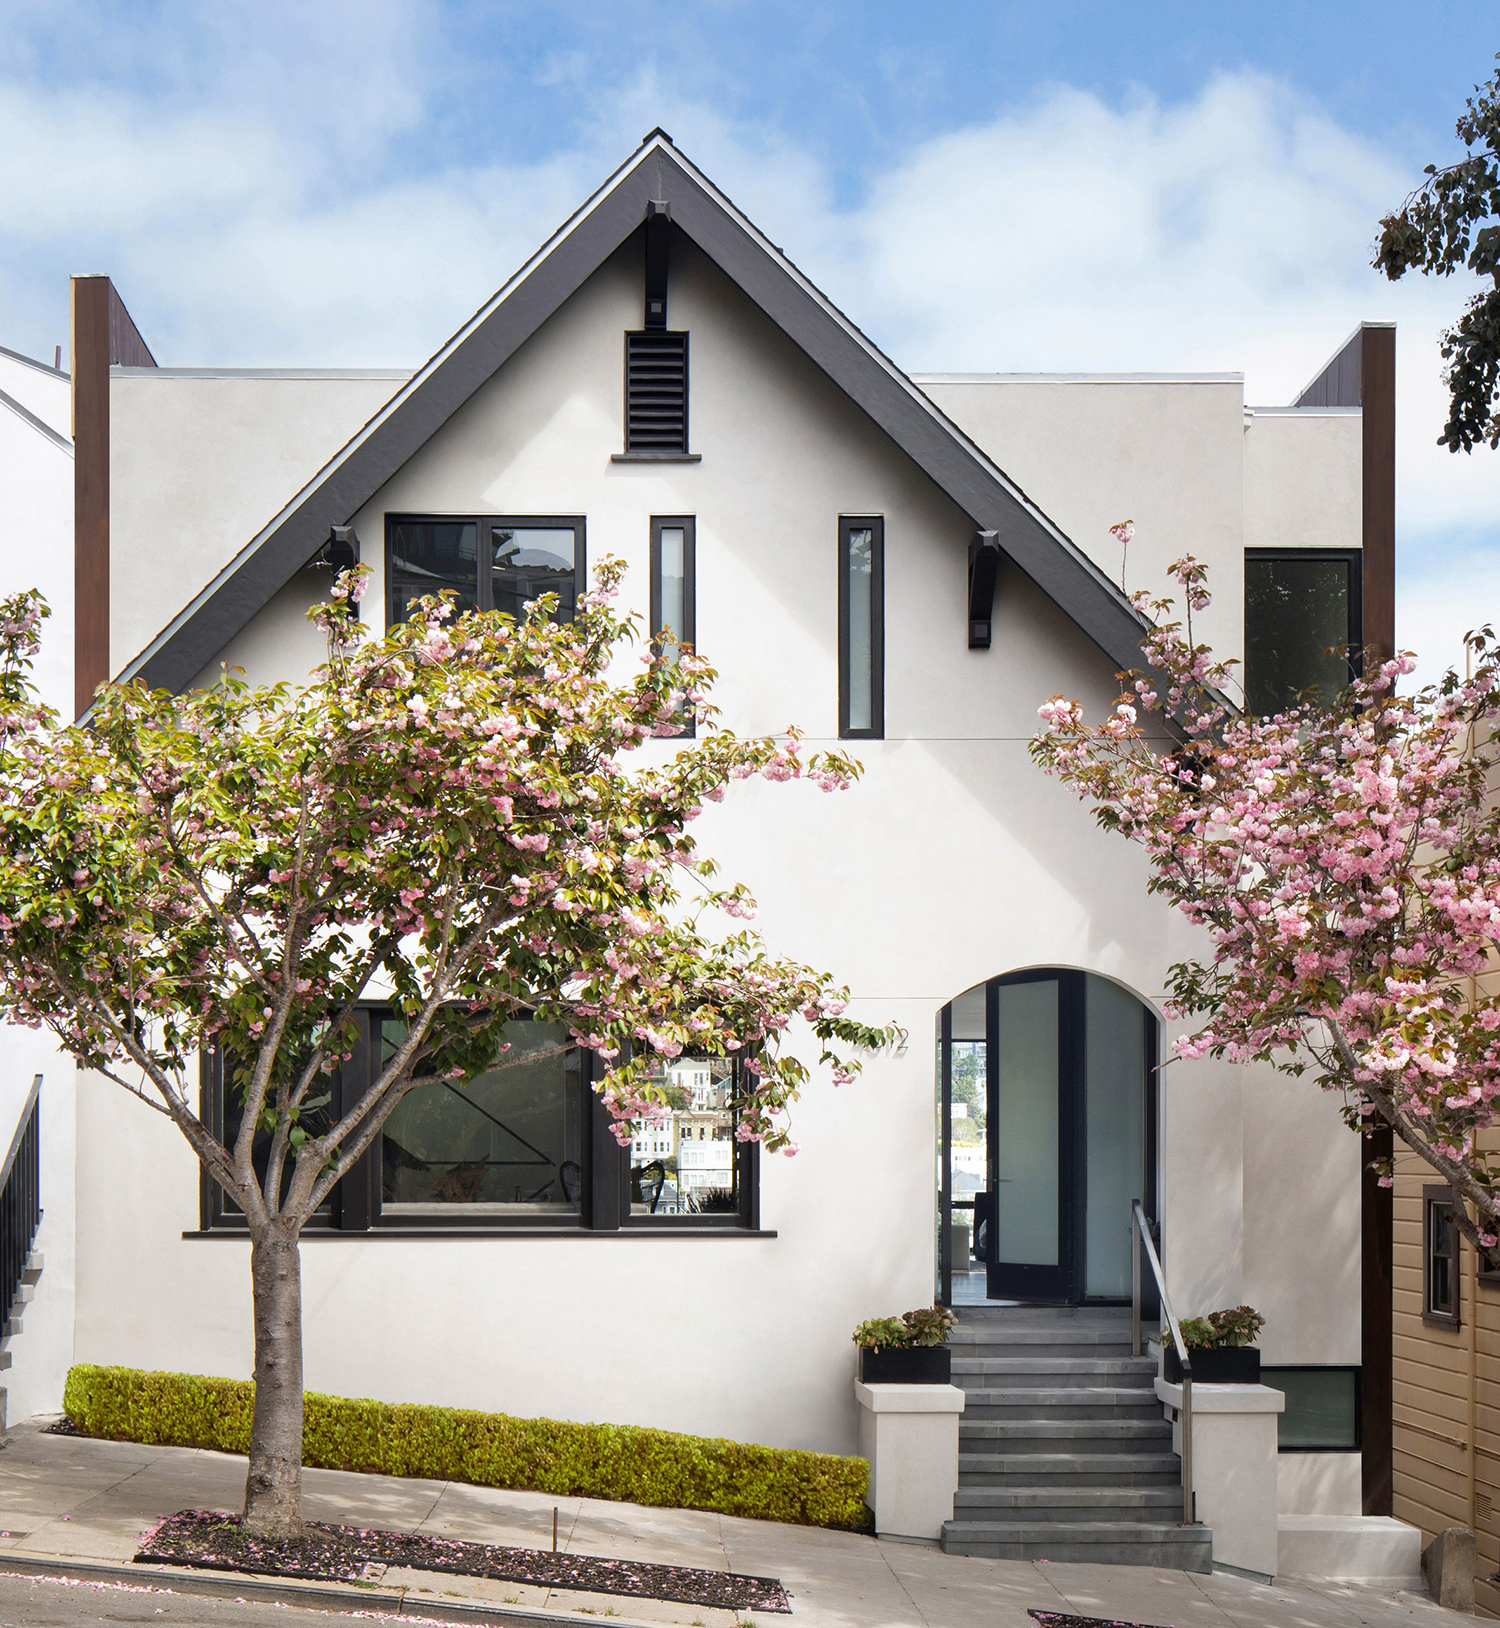 Top Updates to Improve Your Home’s Exterior Design